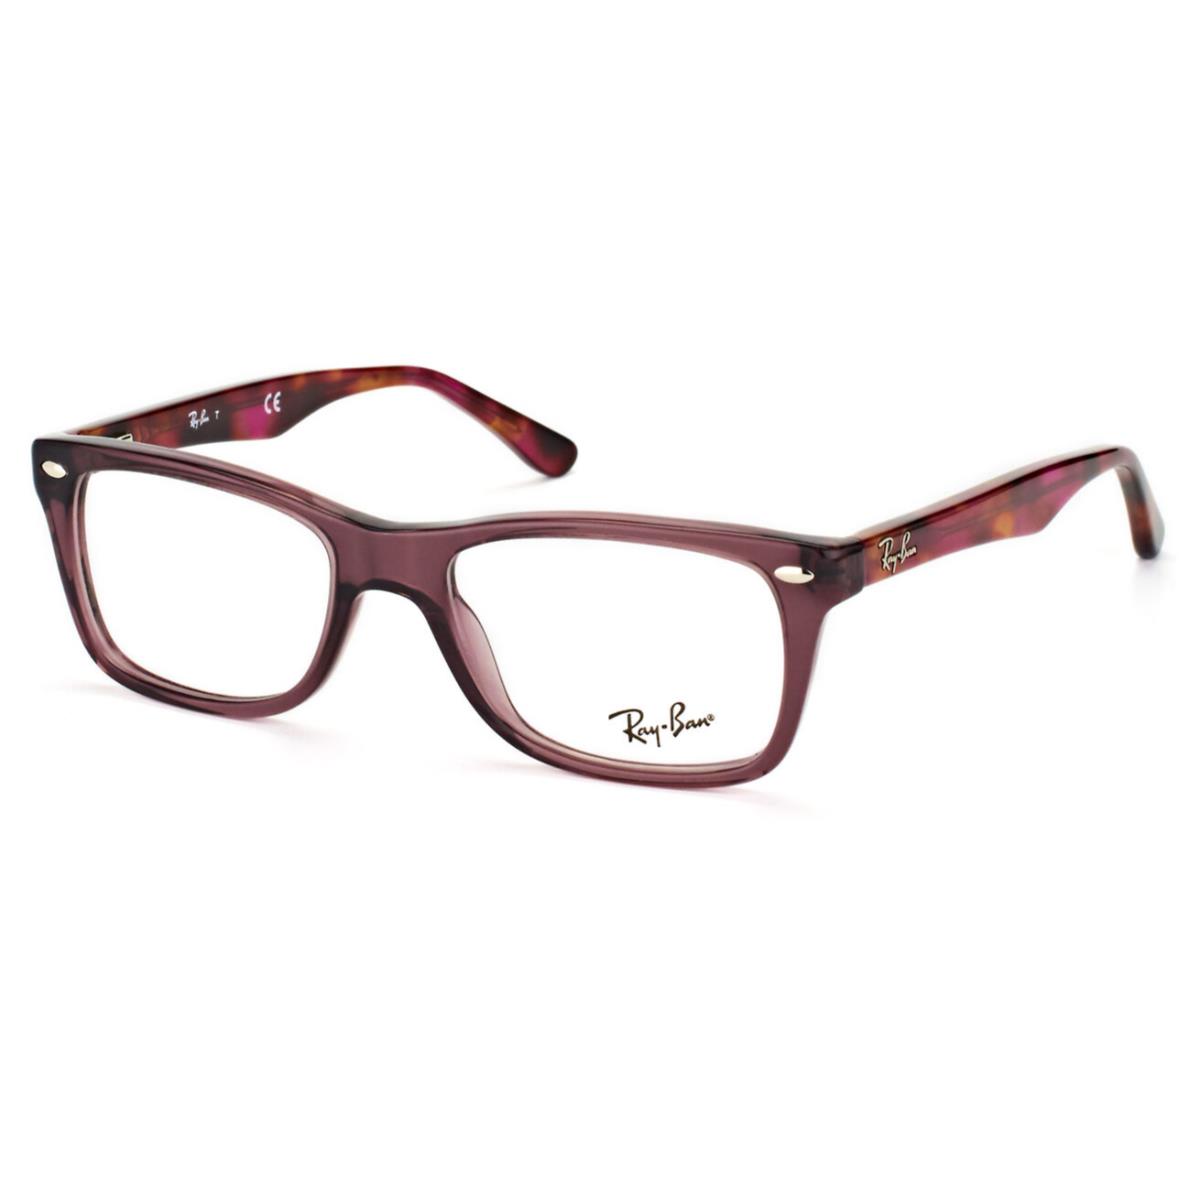 Ray Ban RX5228 5628 Opal Brown 55/17/140 Eyeglasses - Frame: Opal Brown